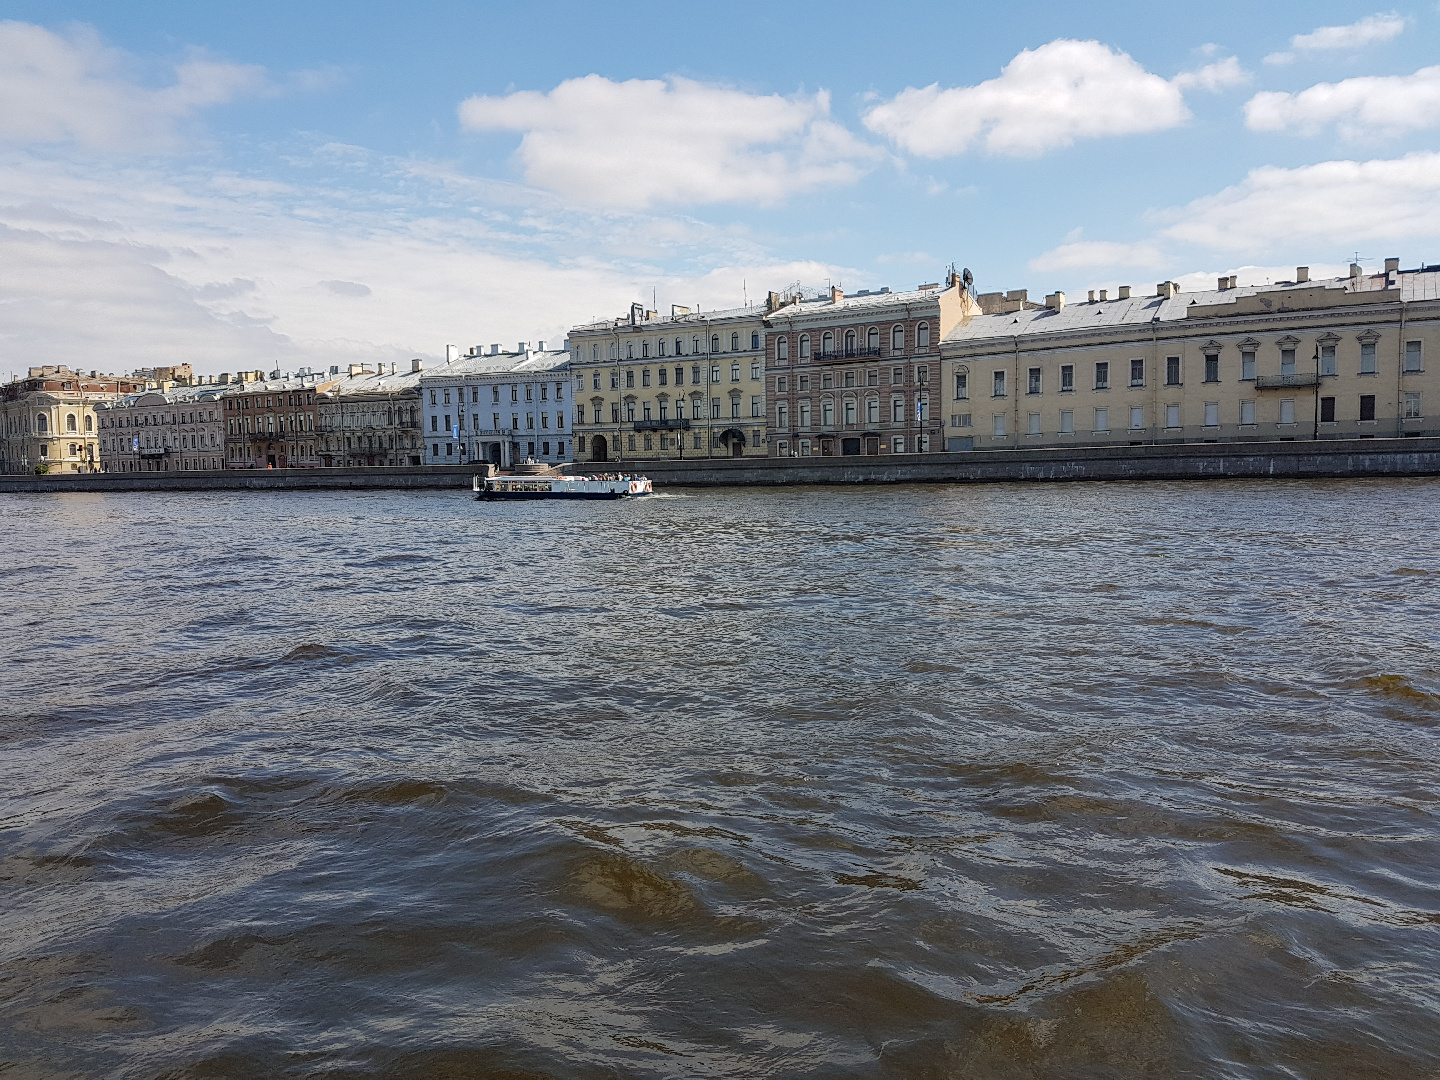 20170709-143103-St-Petersburg-Neva-SJ.jpg